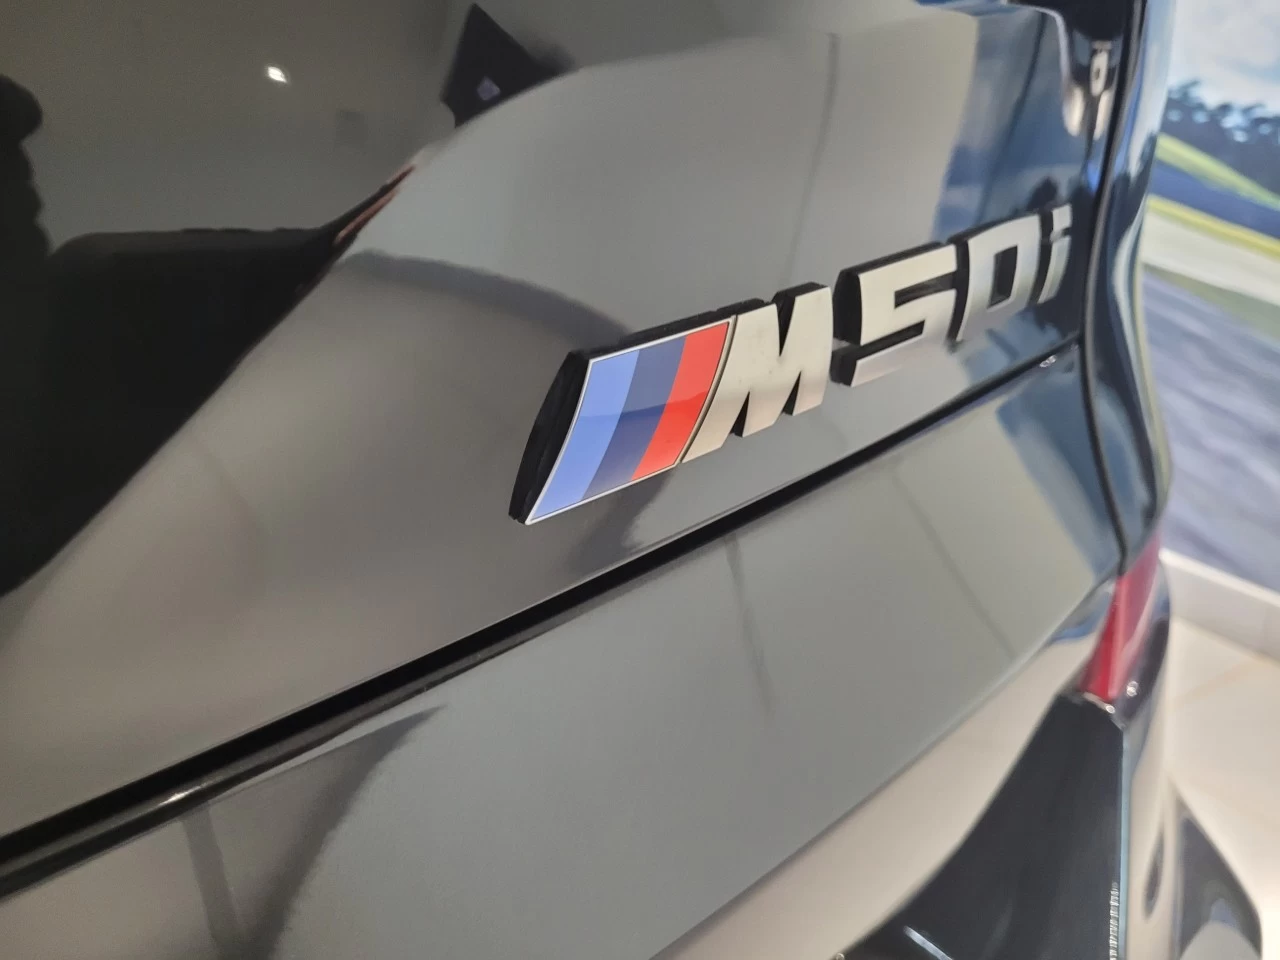 2021 BMW X5 M50i Image principale